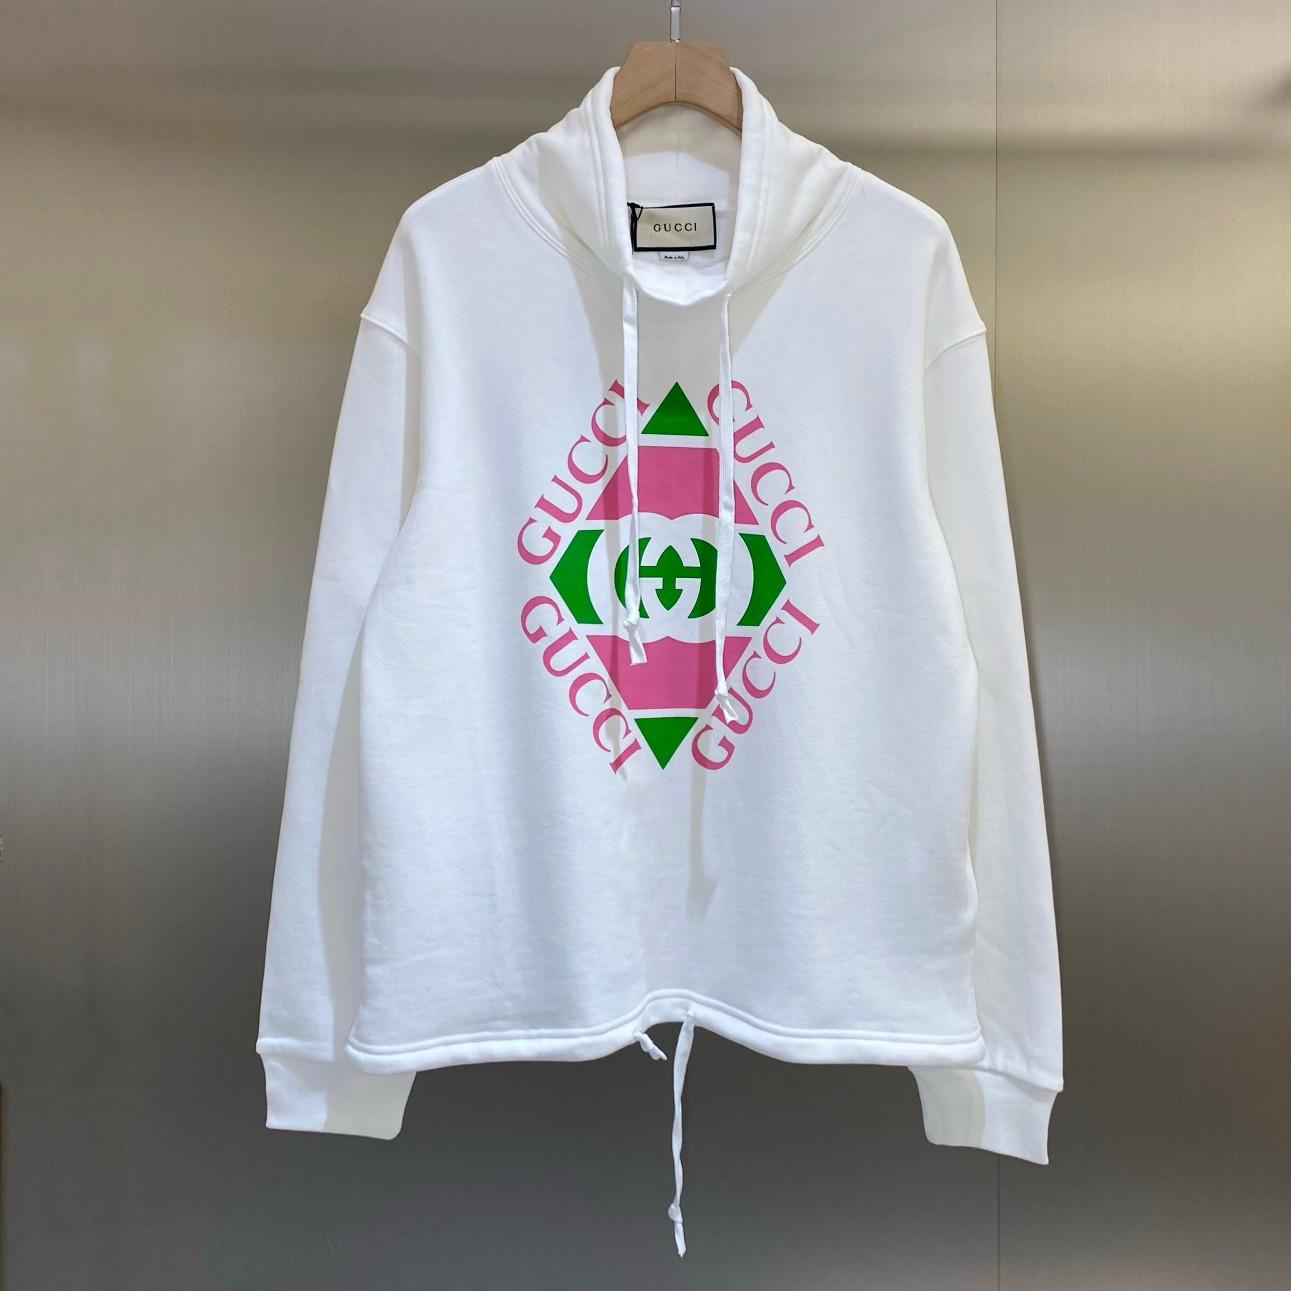 gucci-vintage-logo-cotton-sweatshirt-5003_16844005862-1000